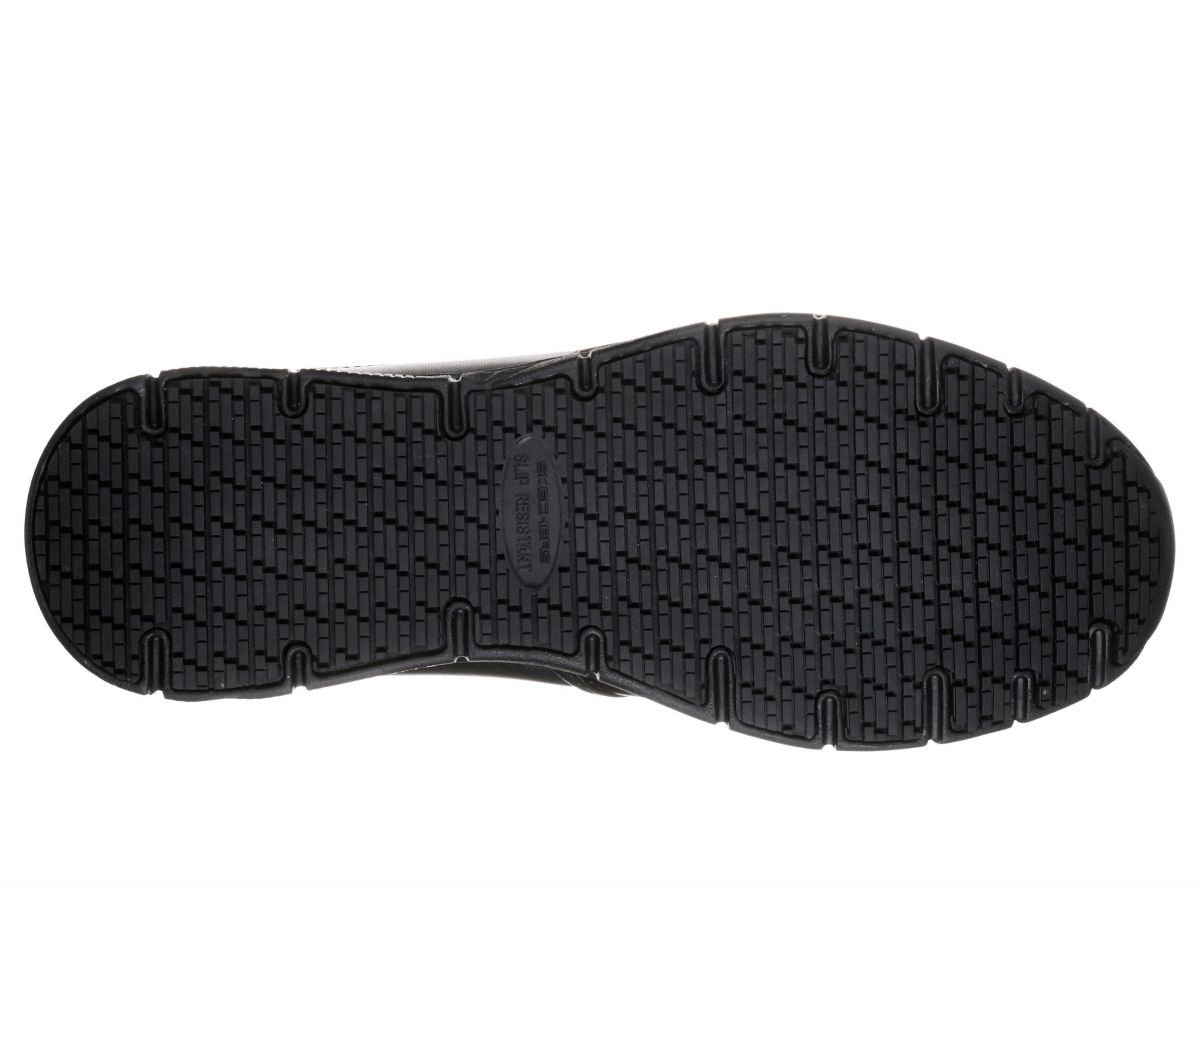 SKECHERS WORK Men's Relaxed Fit Nampa - Groton SR Slip Resistant Work Shoe Black - 77157-BLK